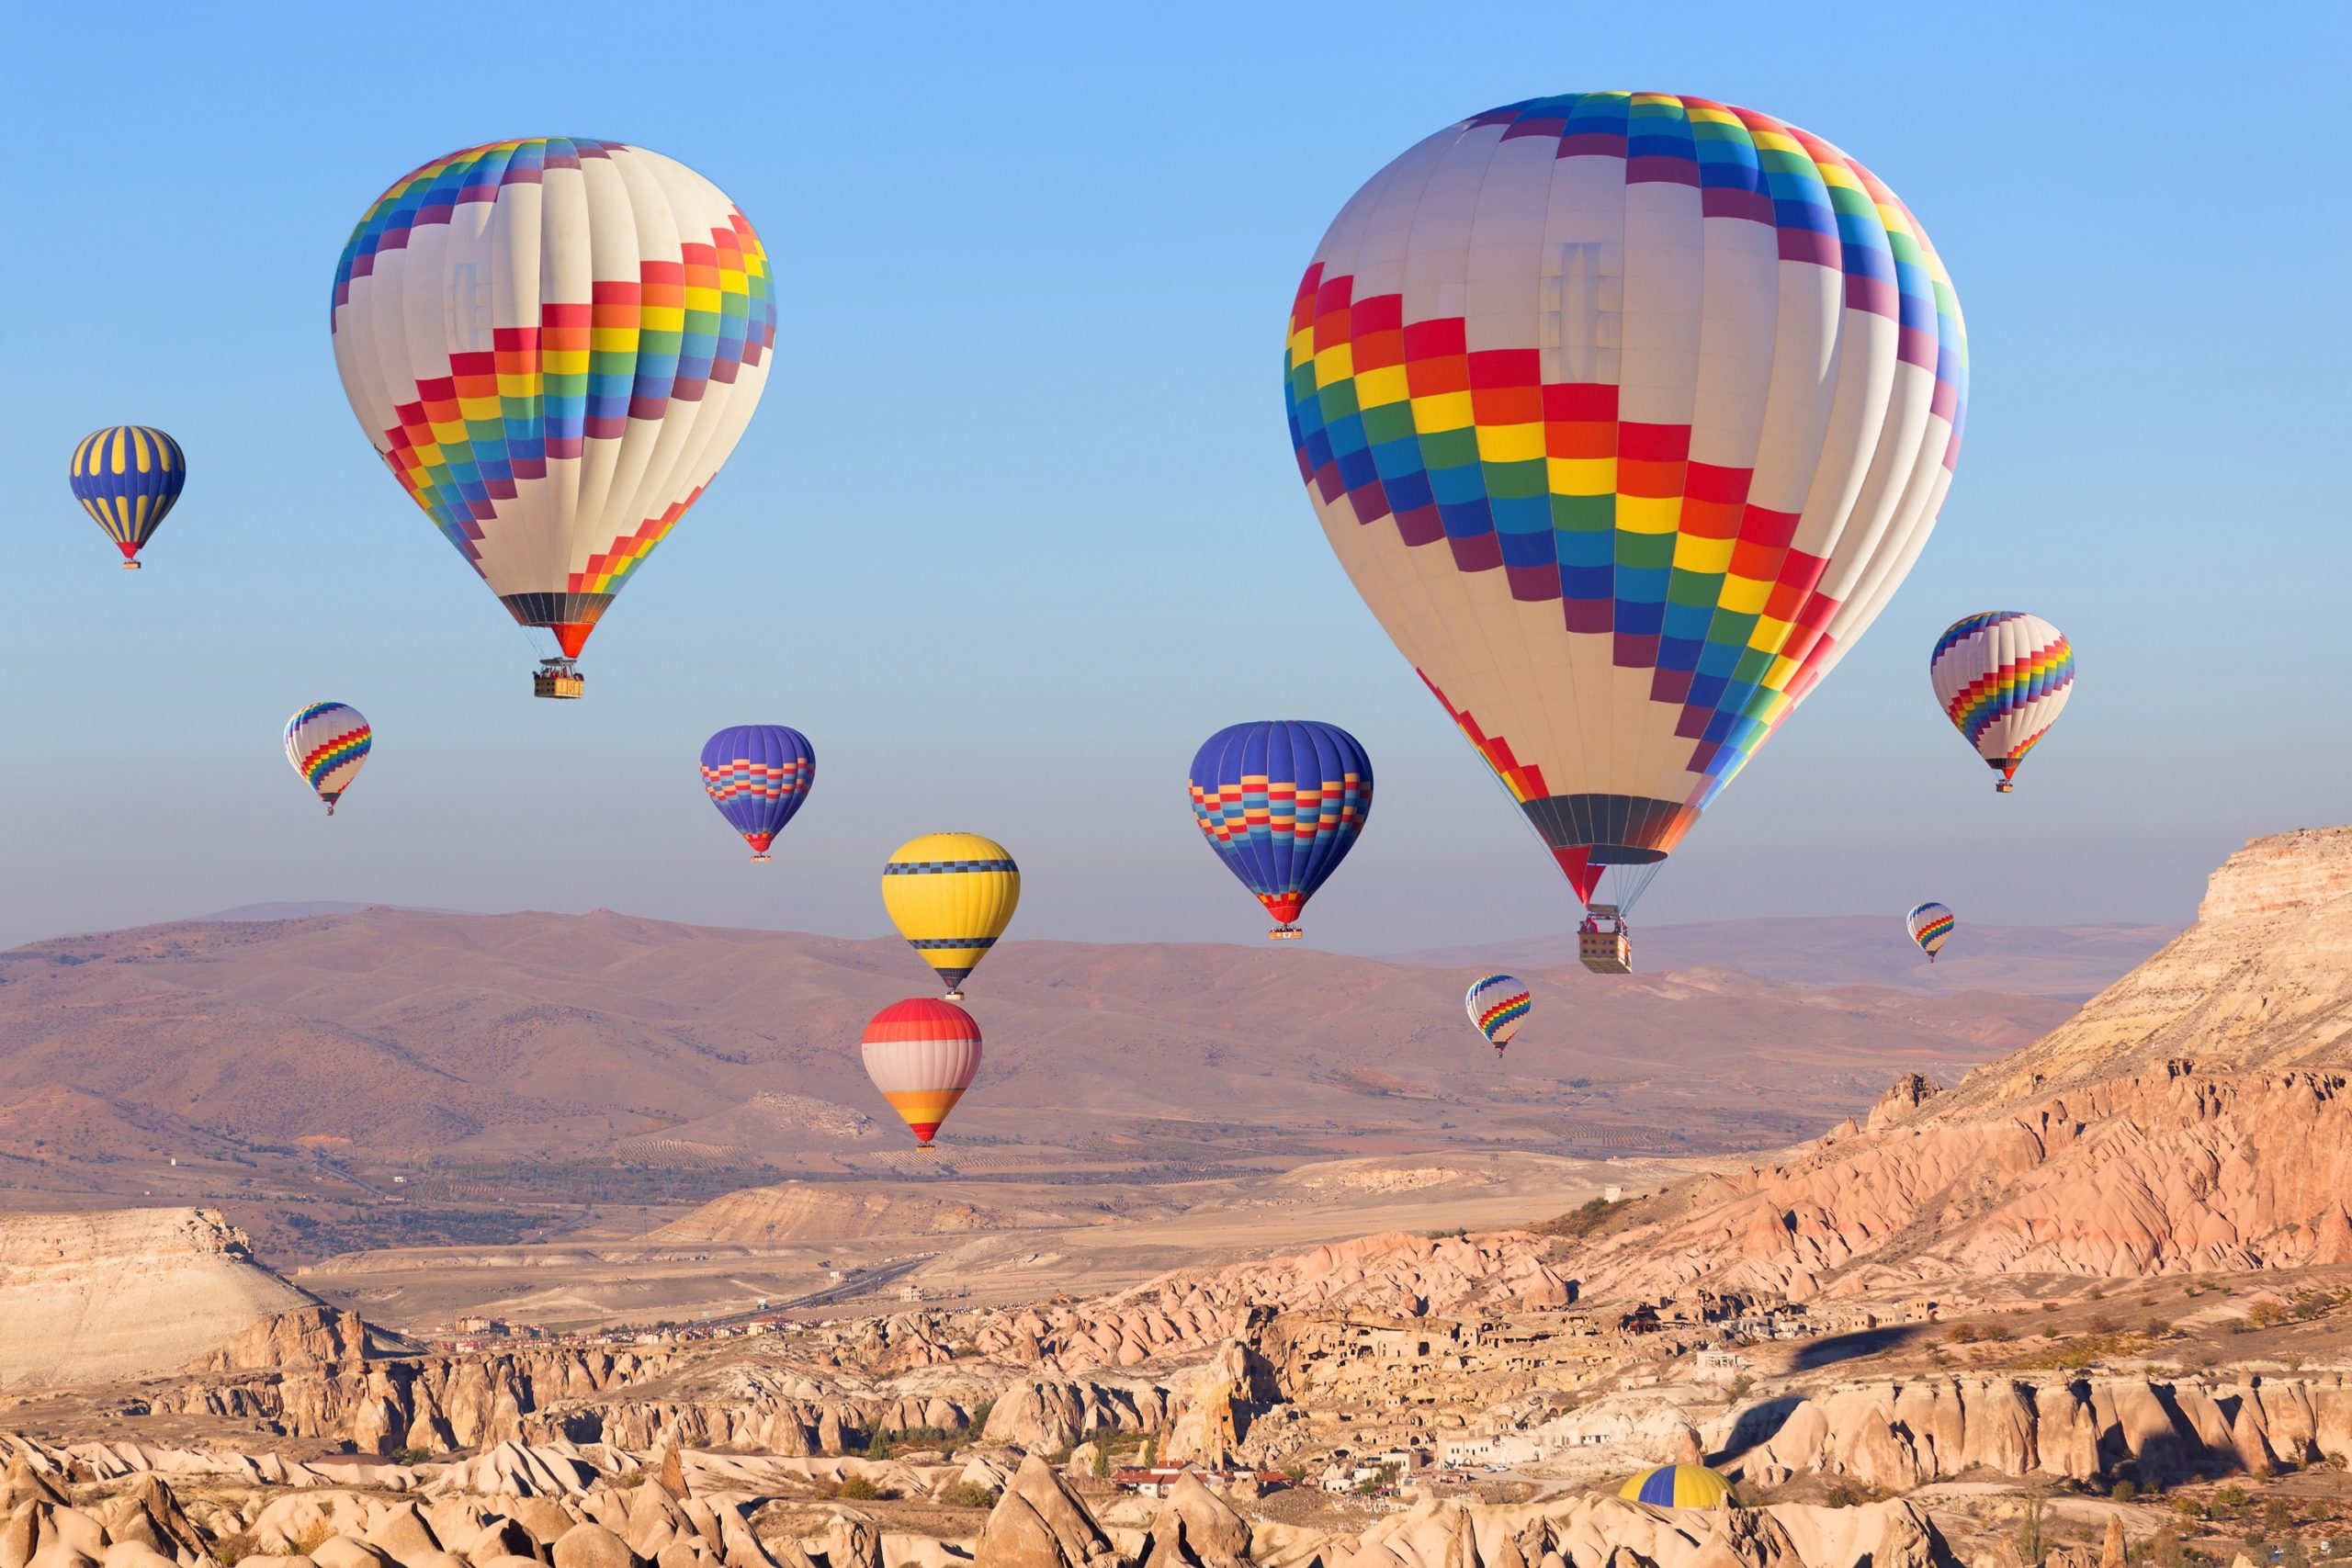 cappadocia hot air balloon tour from istanbul